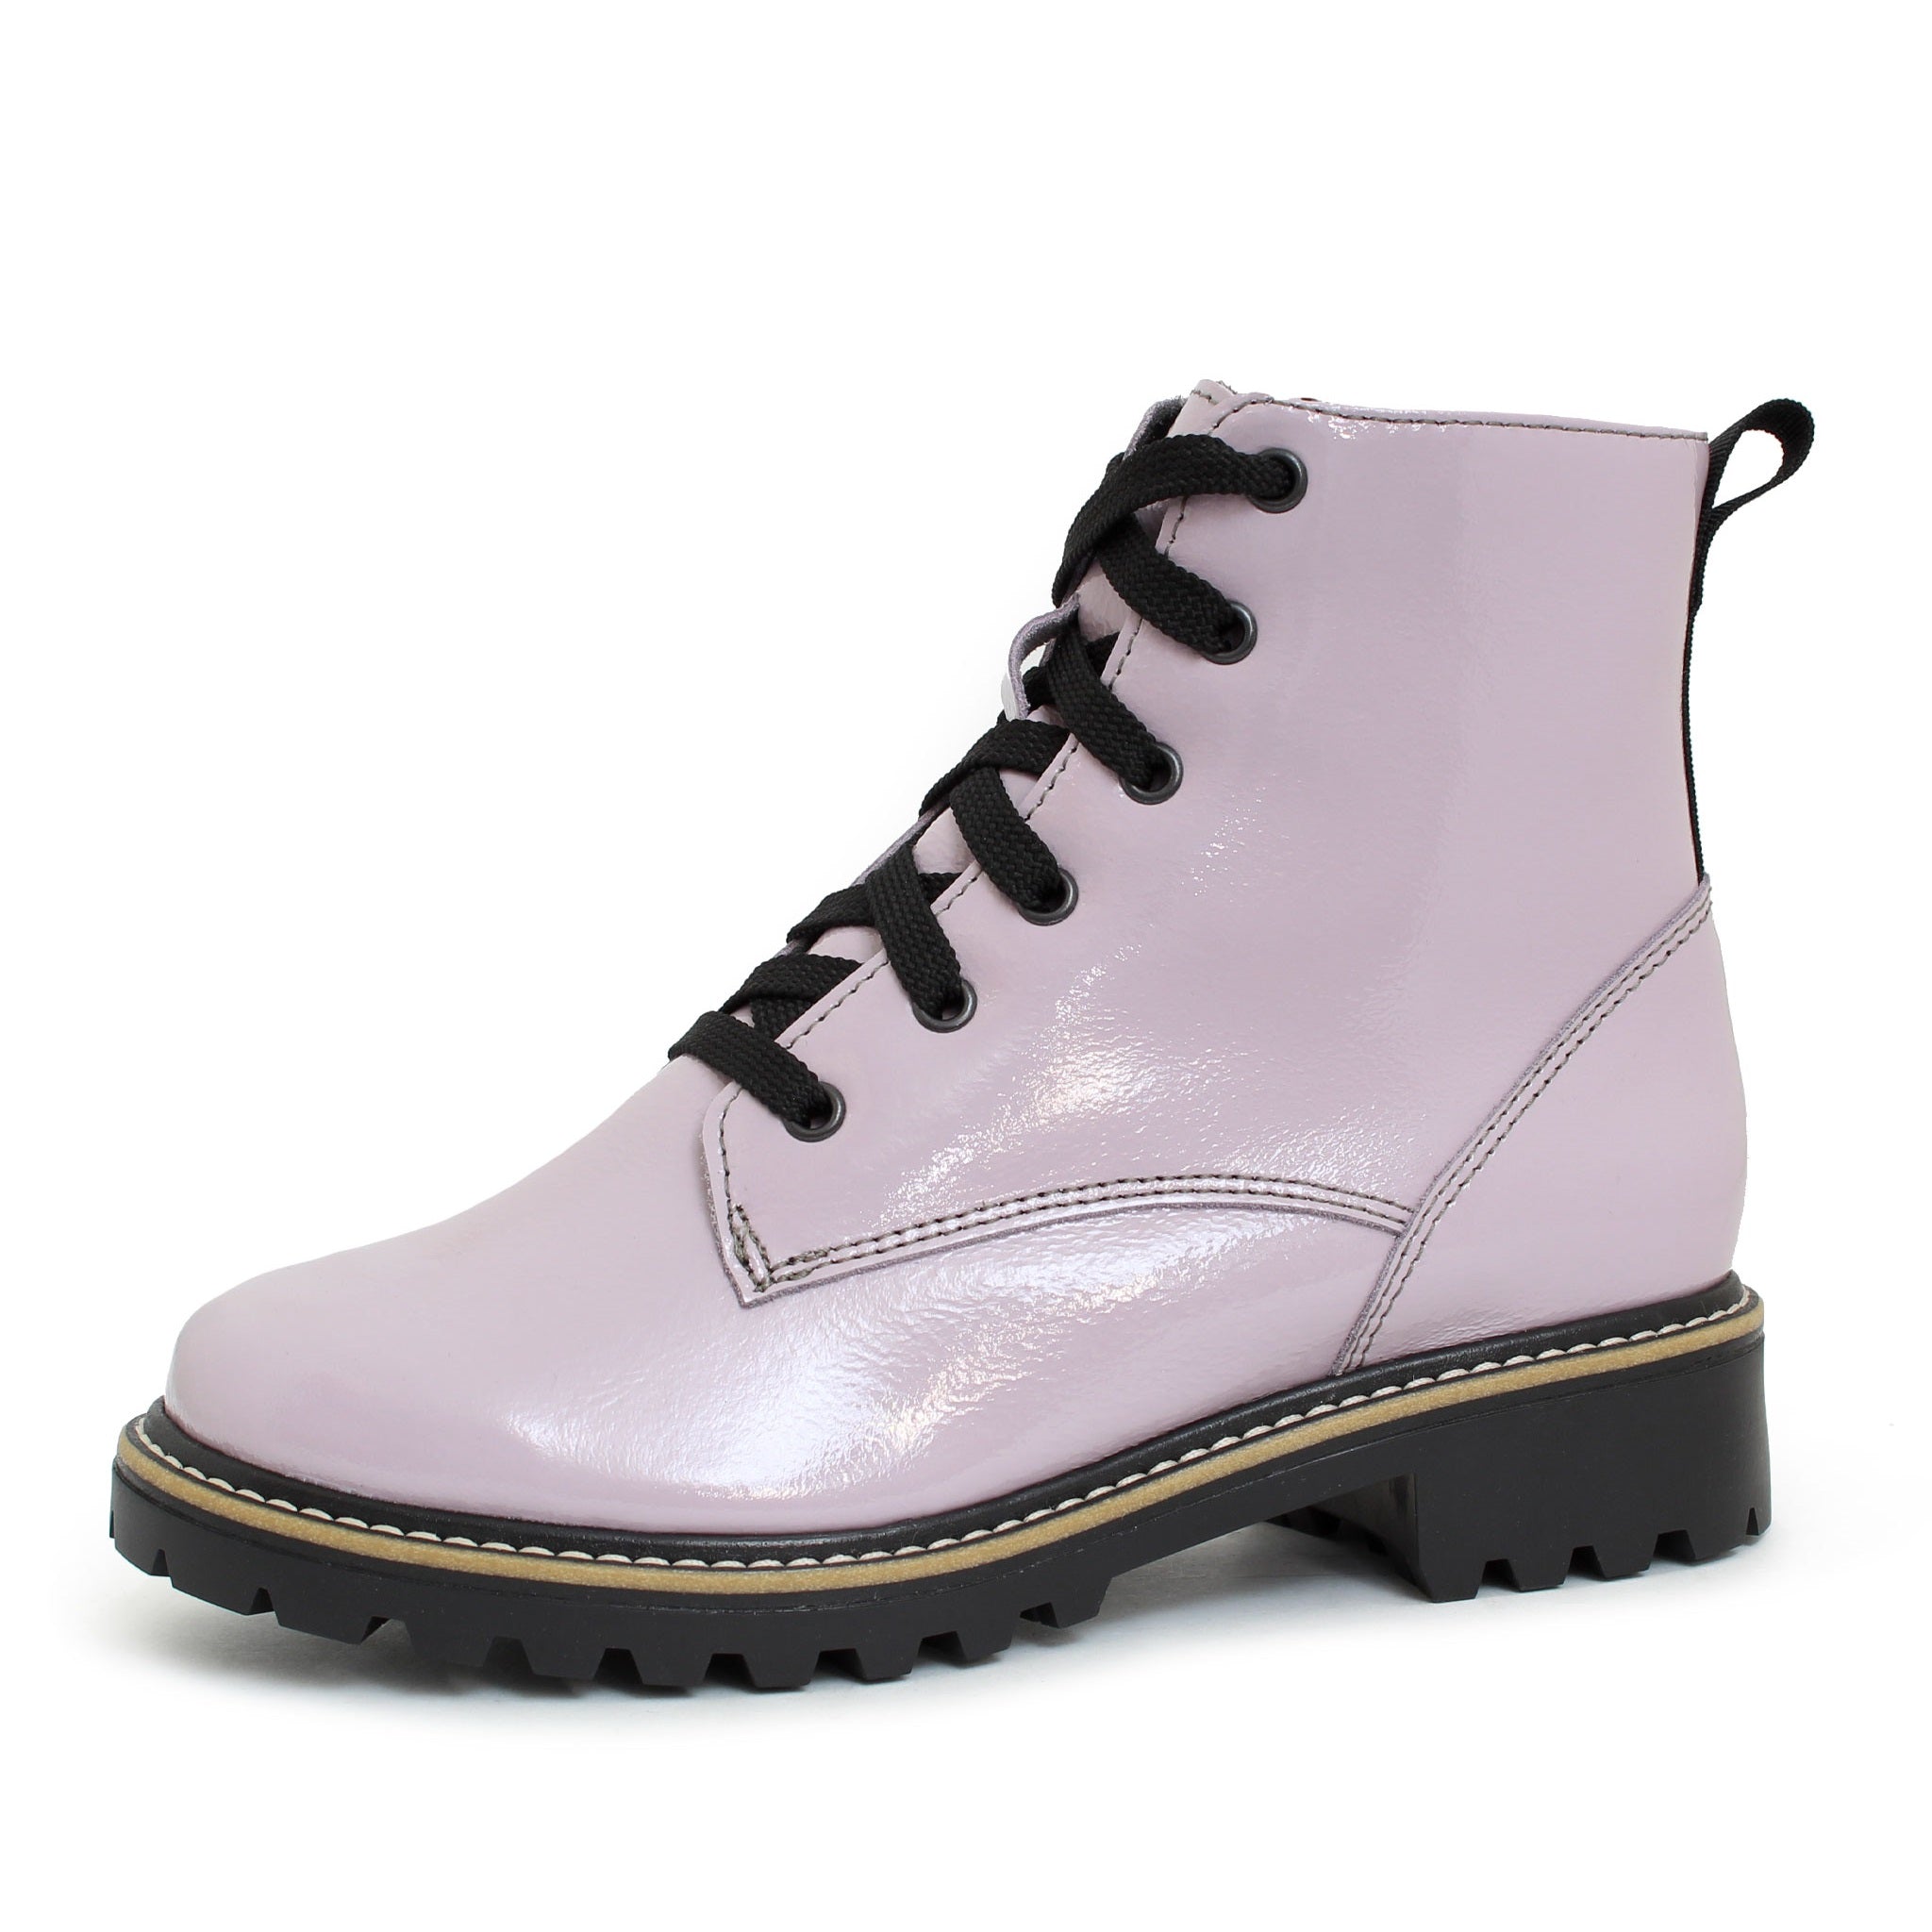 Martino women's boot Nina combat lilac patent